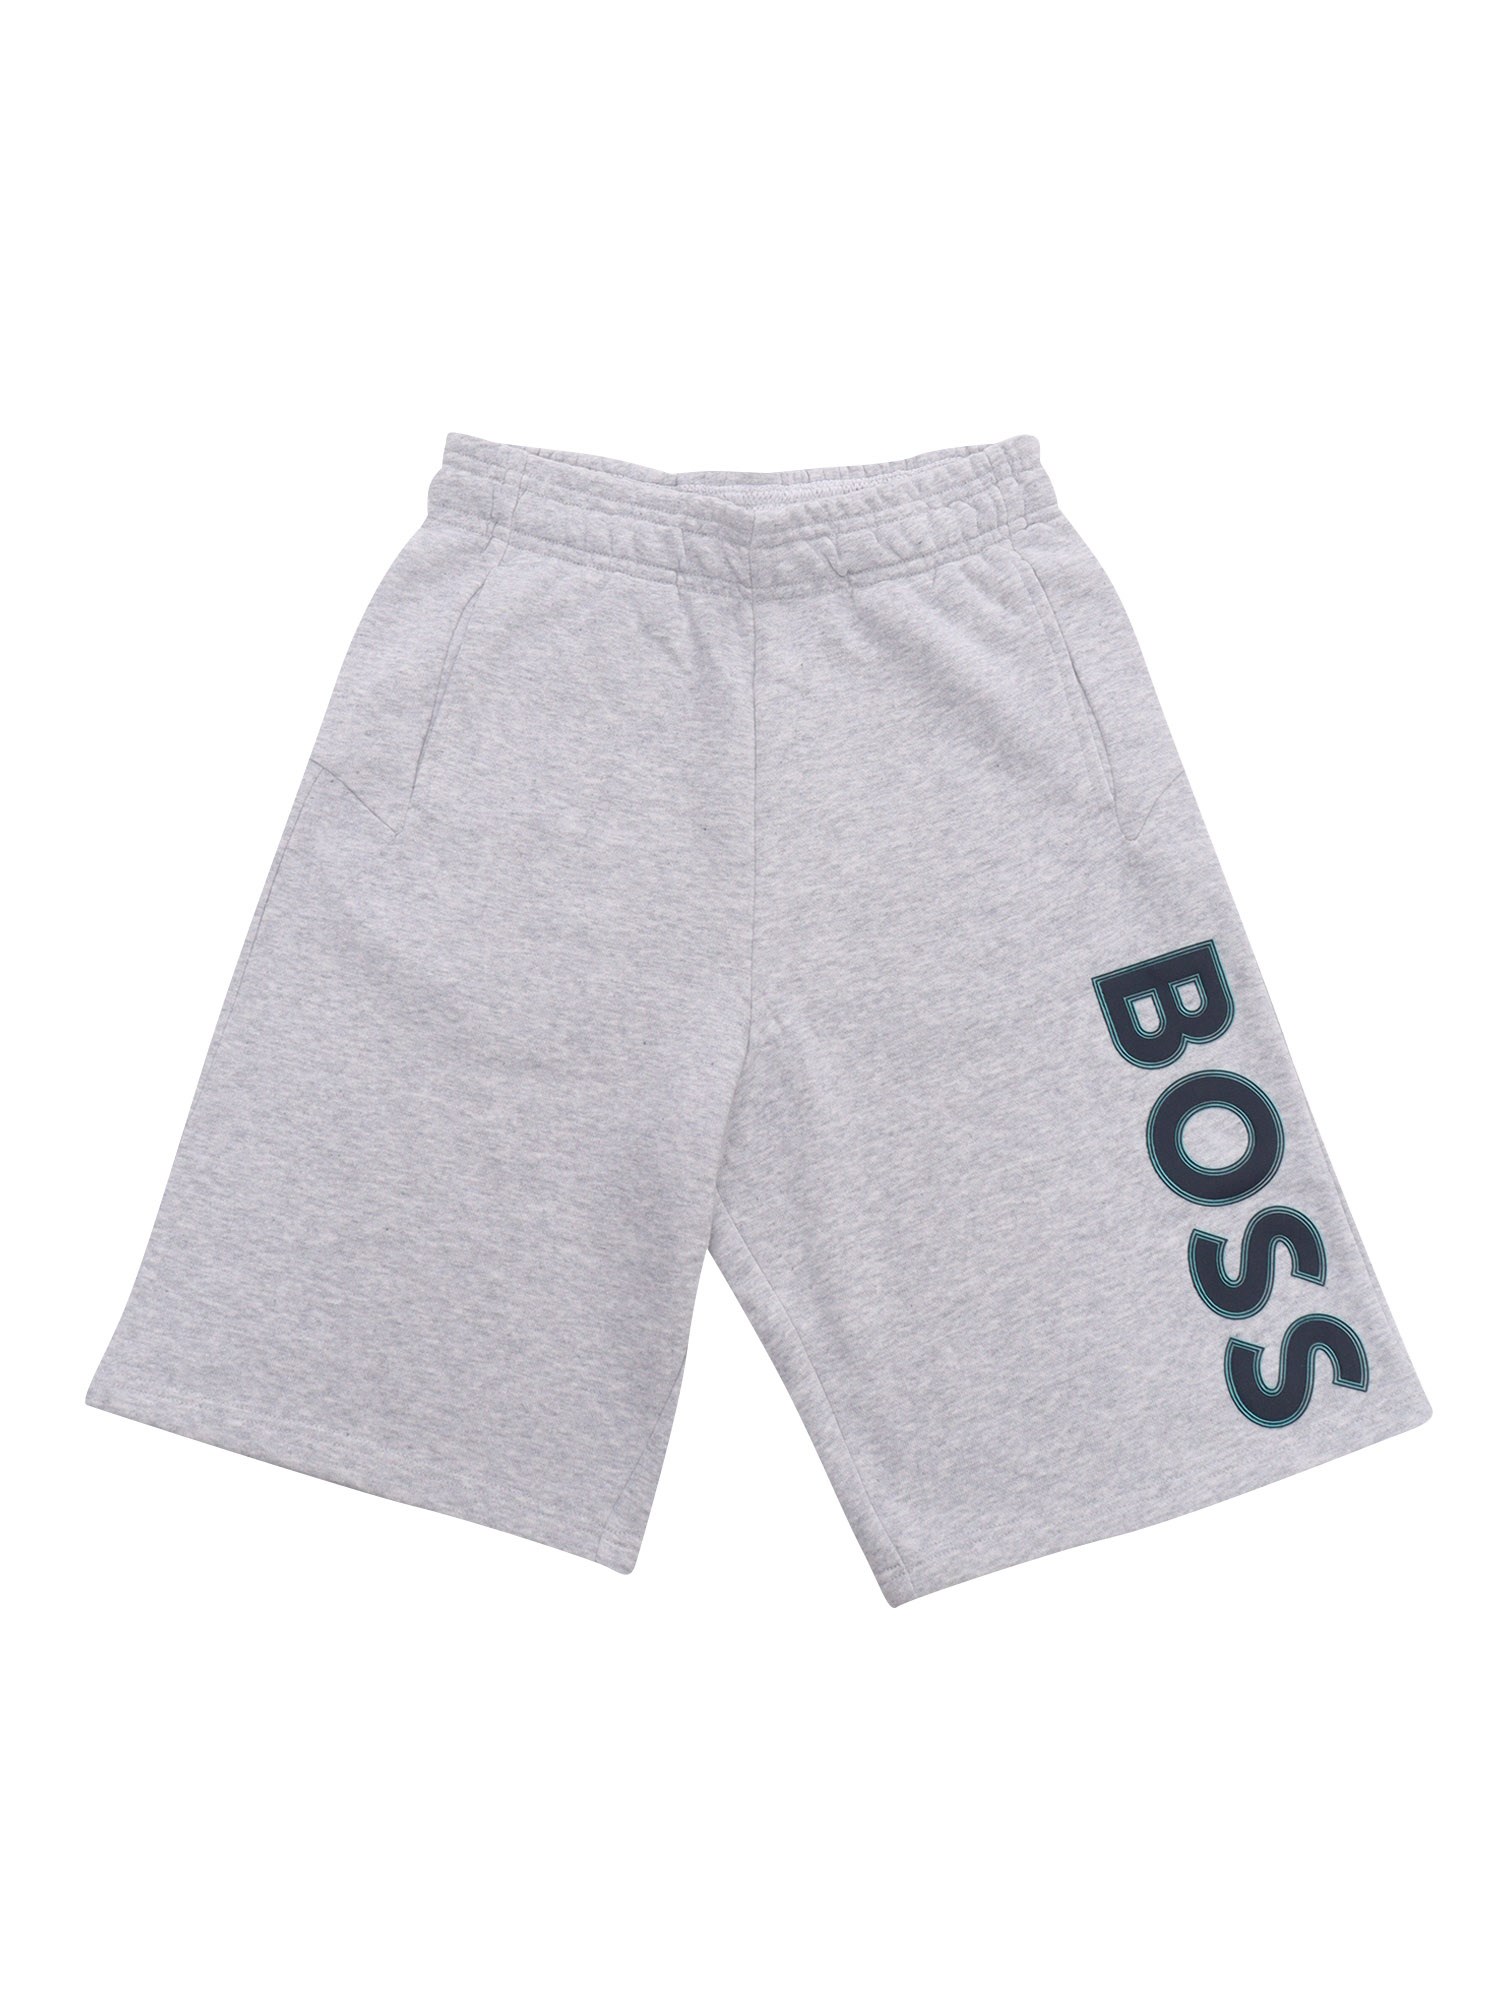 Hugo Boss Grey Shorts With Logo